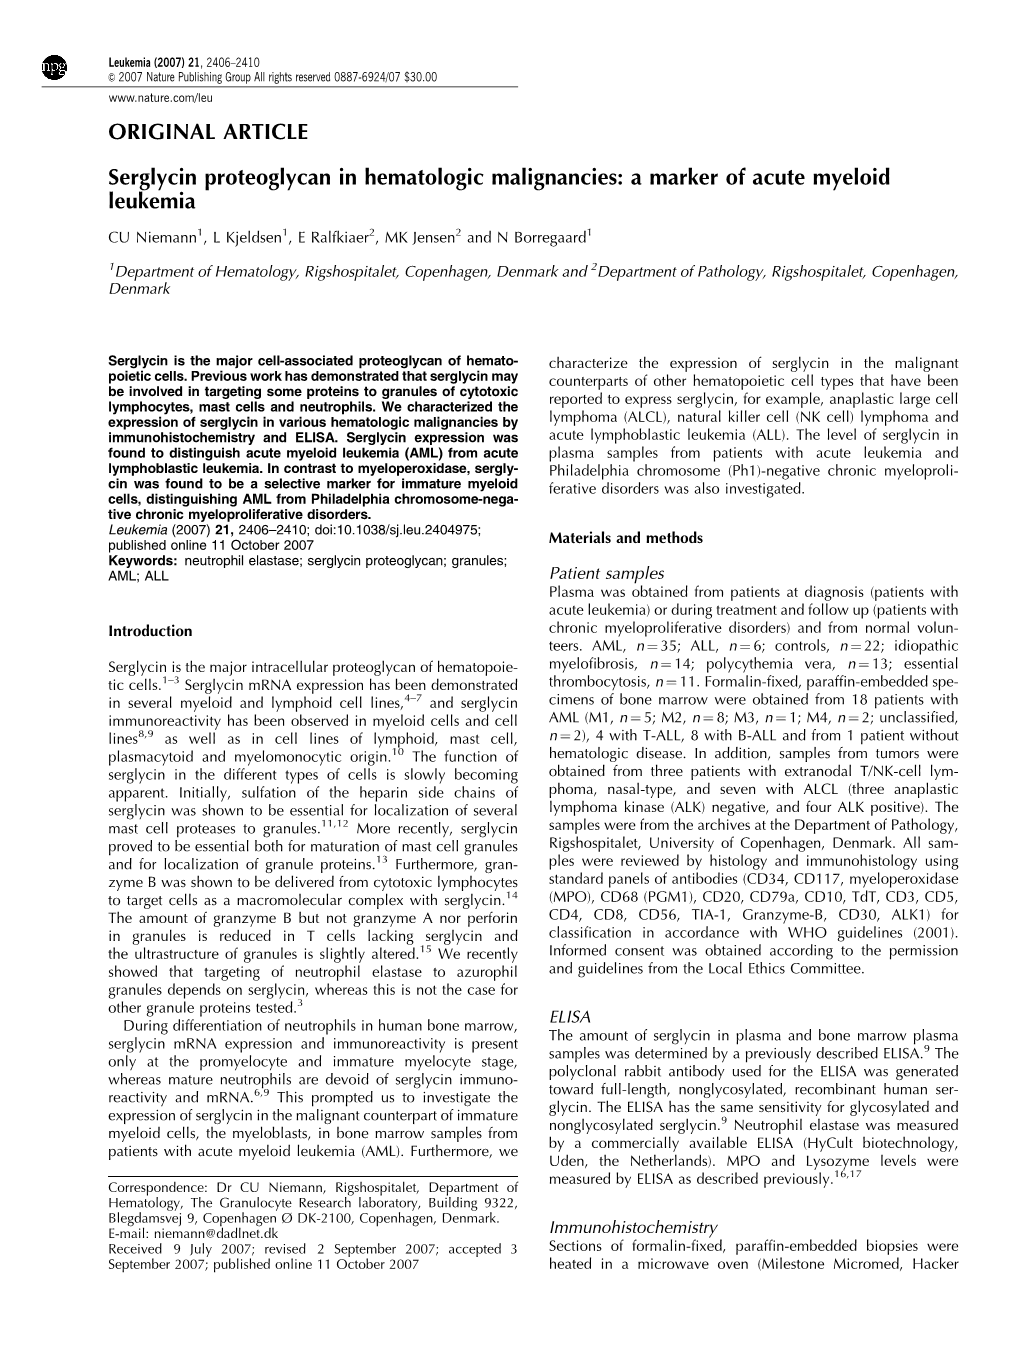 ORIGINAL ARTICLE Serglycin Proteoglycan in Hematologic